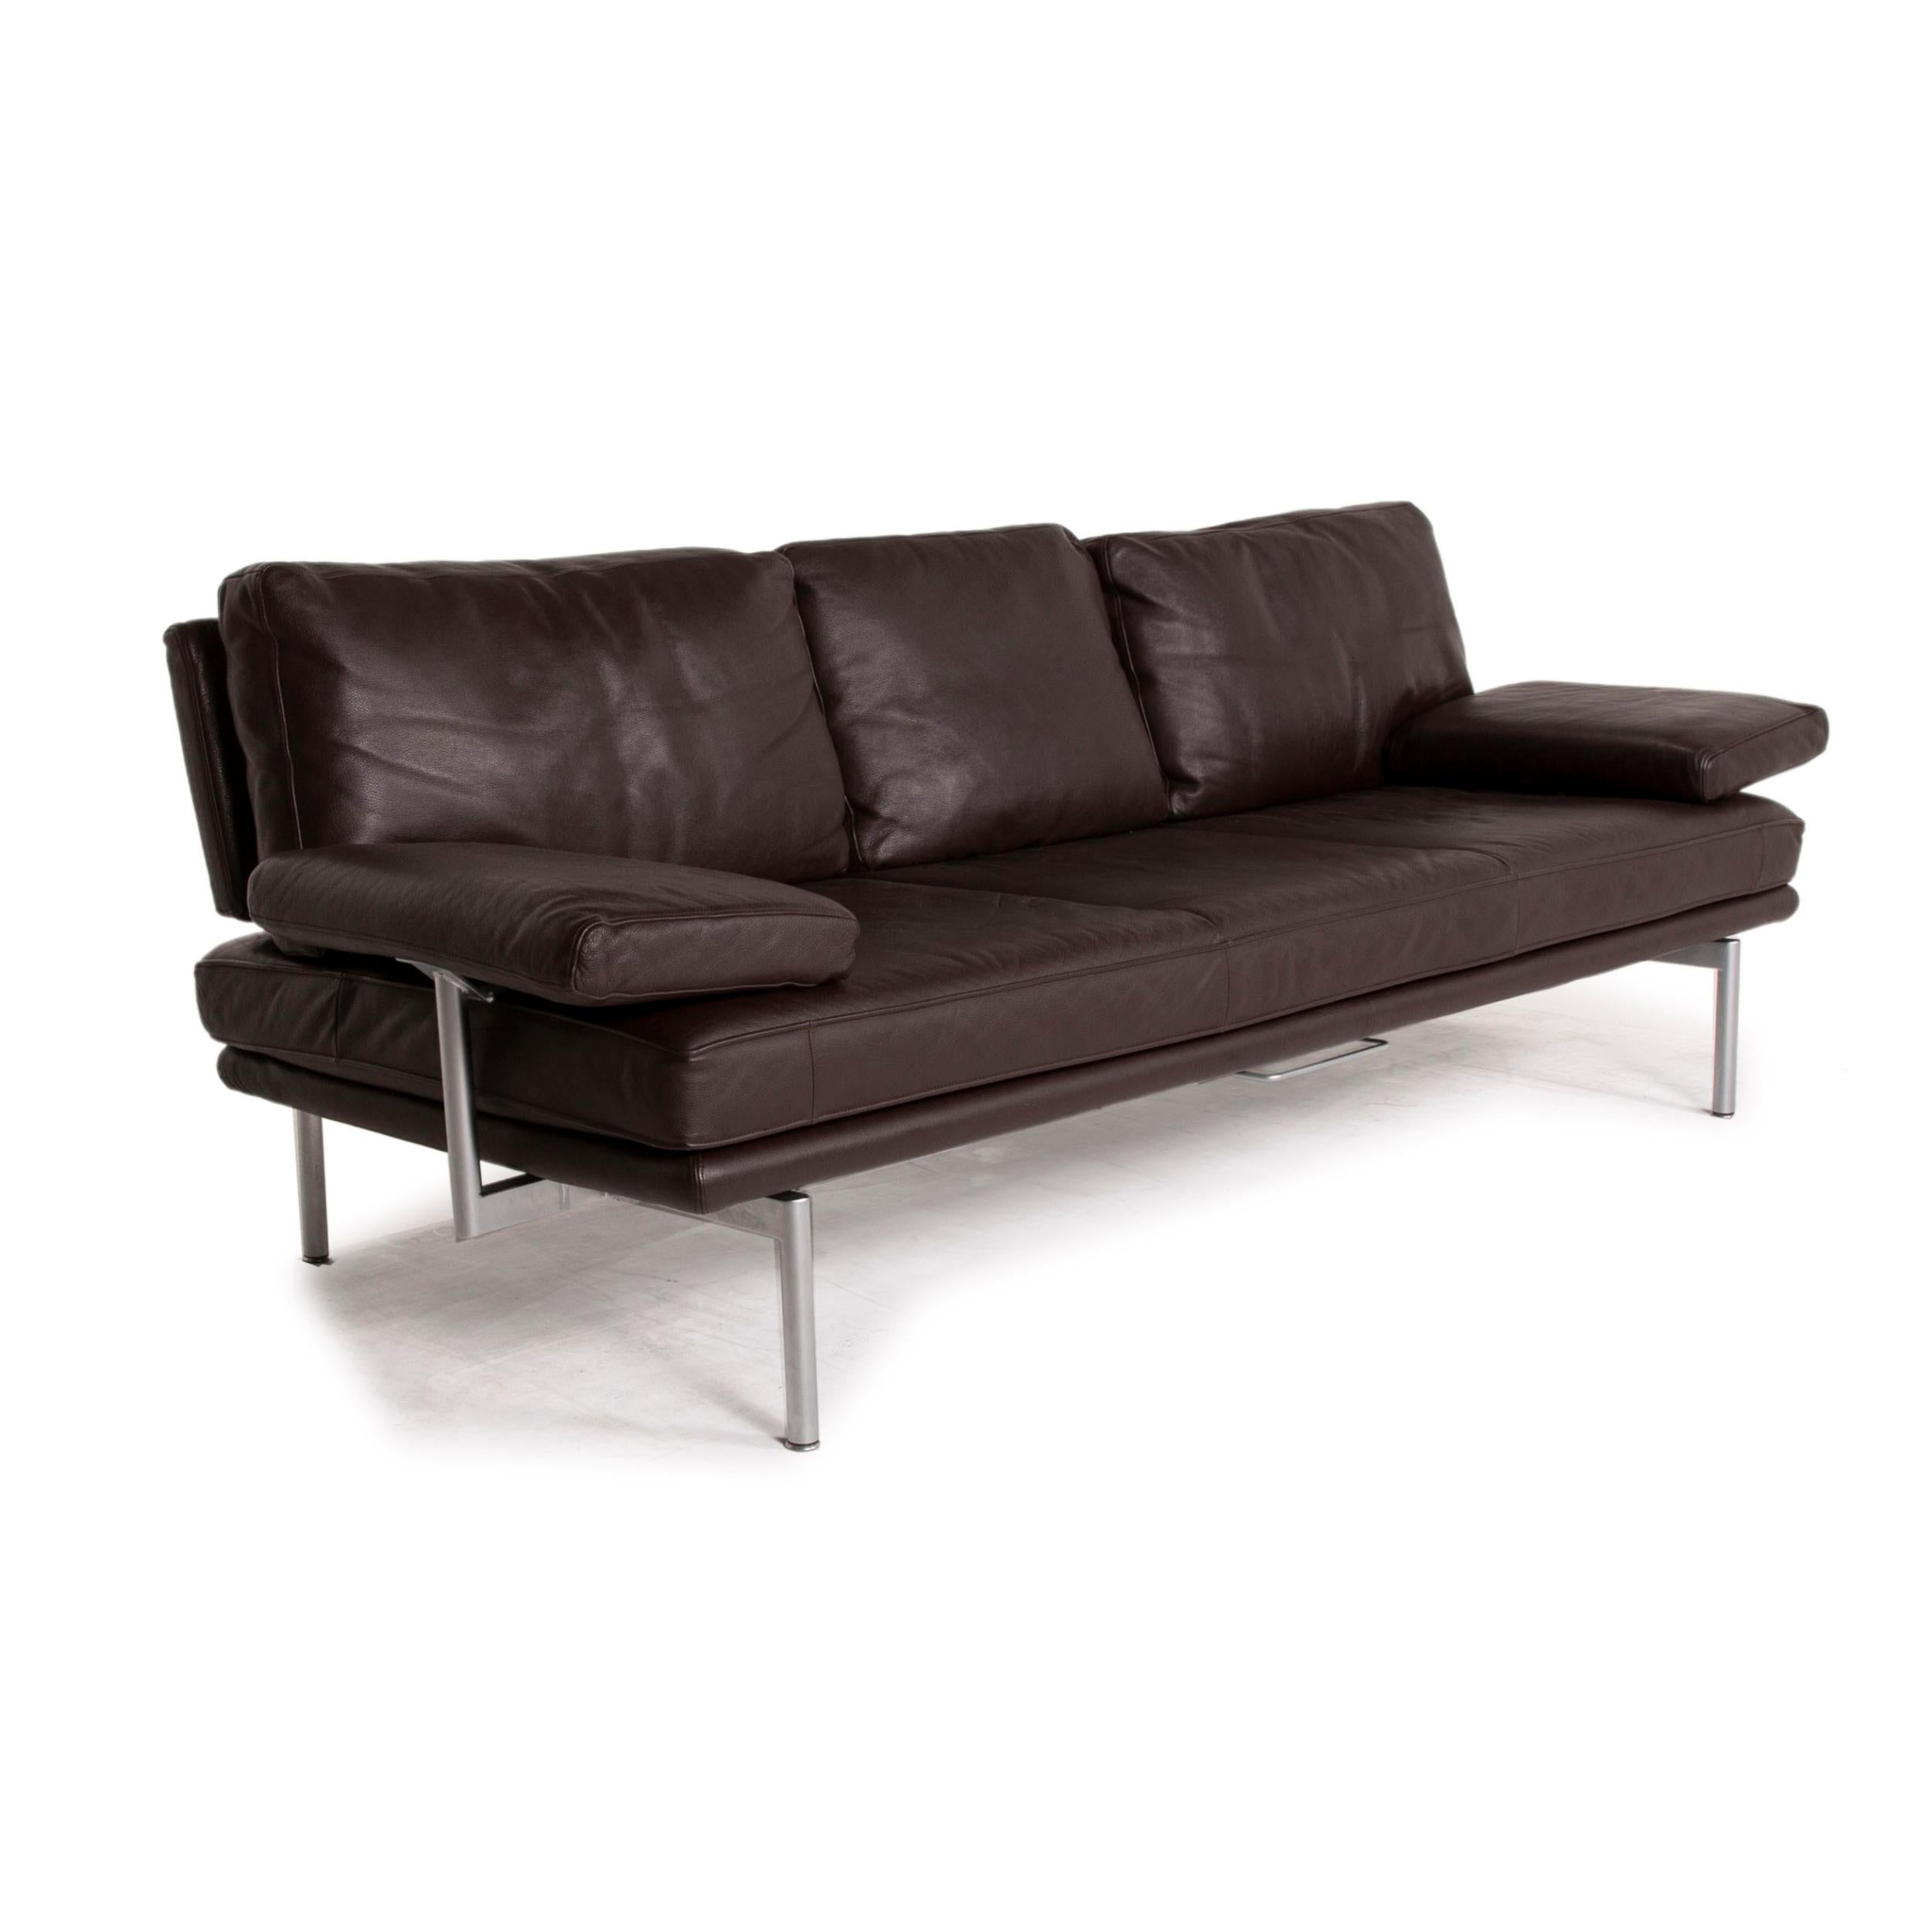 German Walter Knoll Living Platform Leather Sofa Brown Three-Seater Function Dark Brown